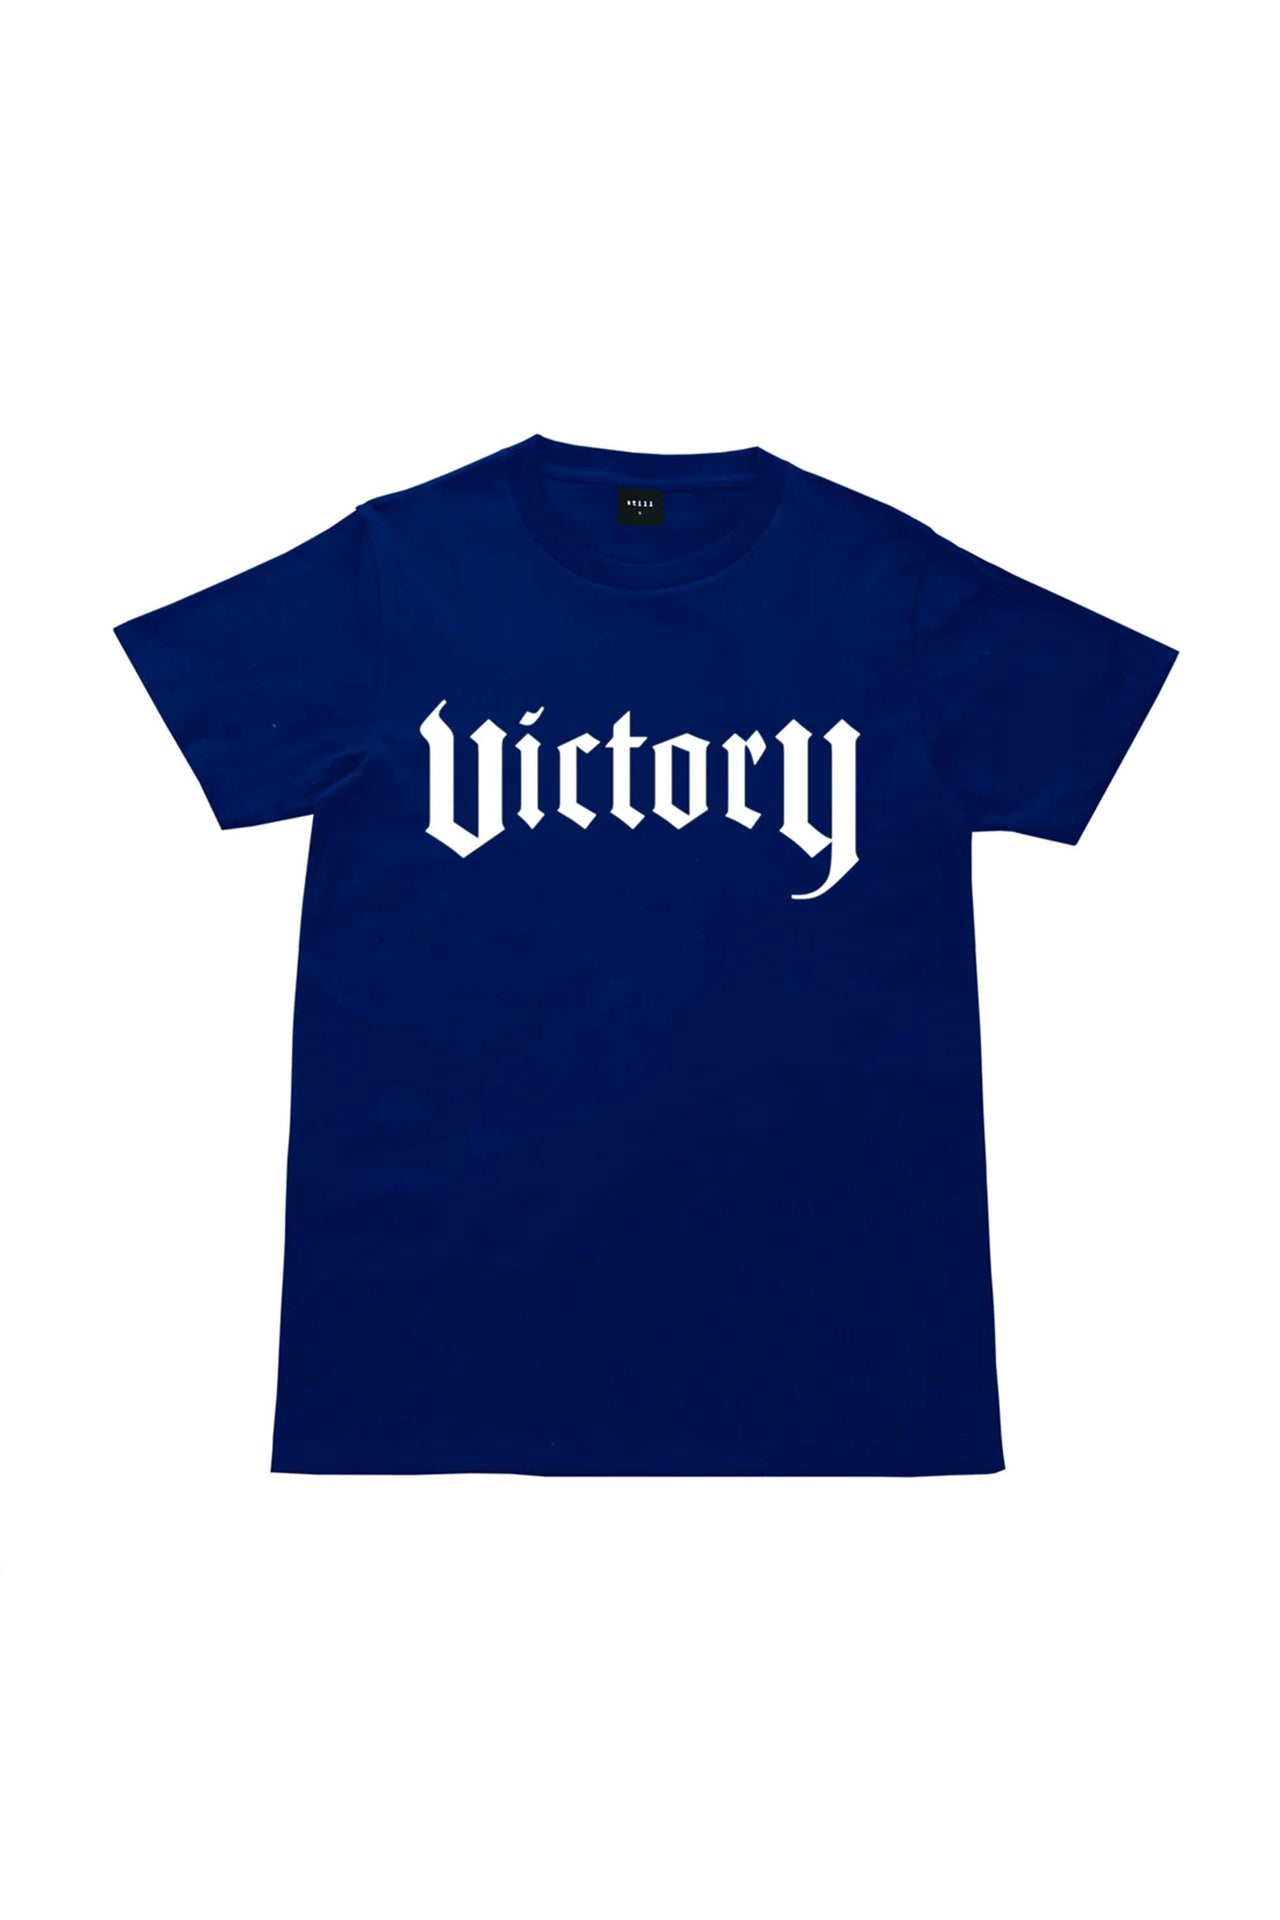 VICTORY Tee (Blue)